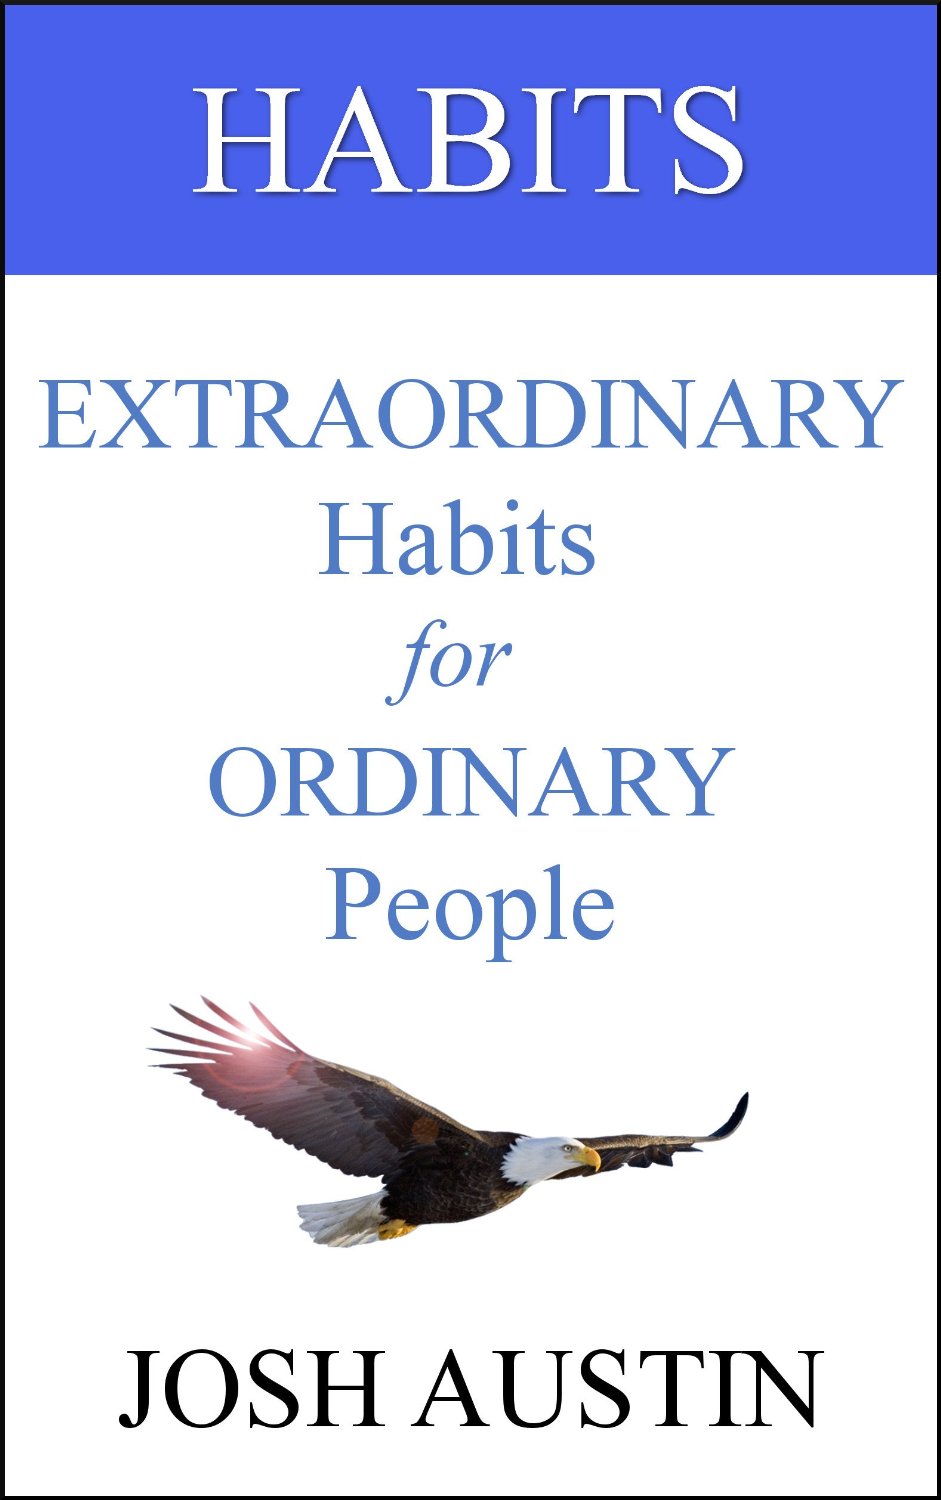 Habits: Extraordinary Habits for Ordinary People by Josh Austin